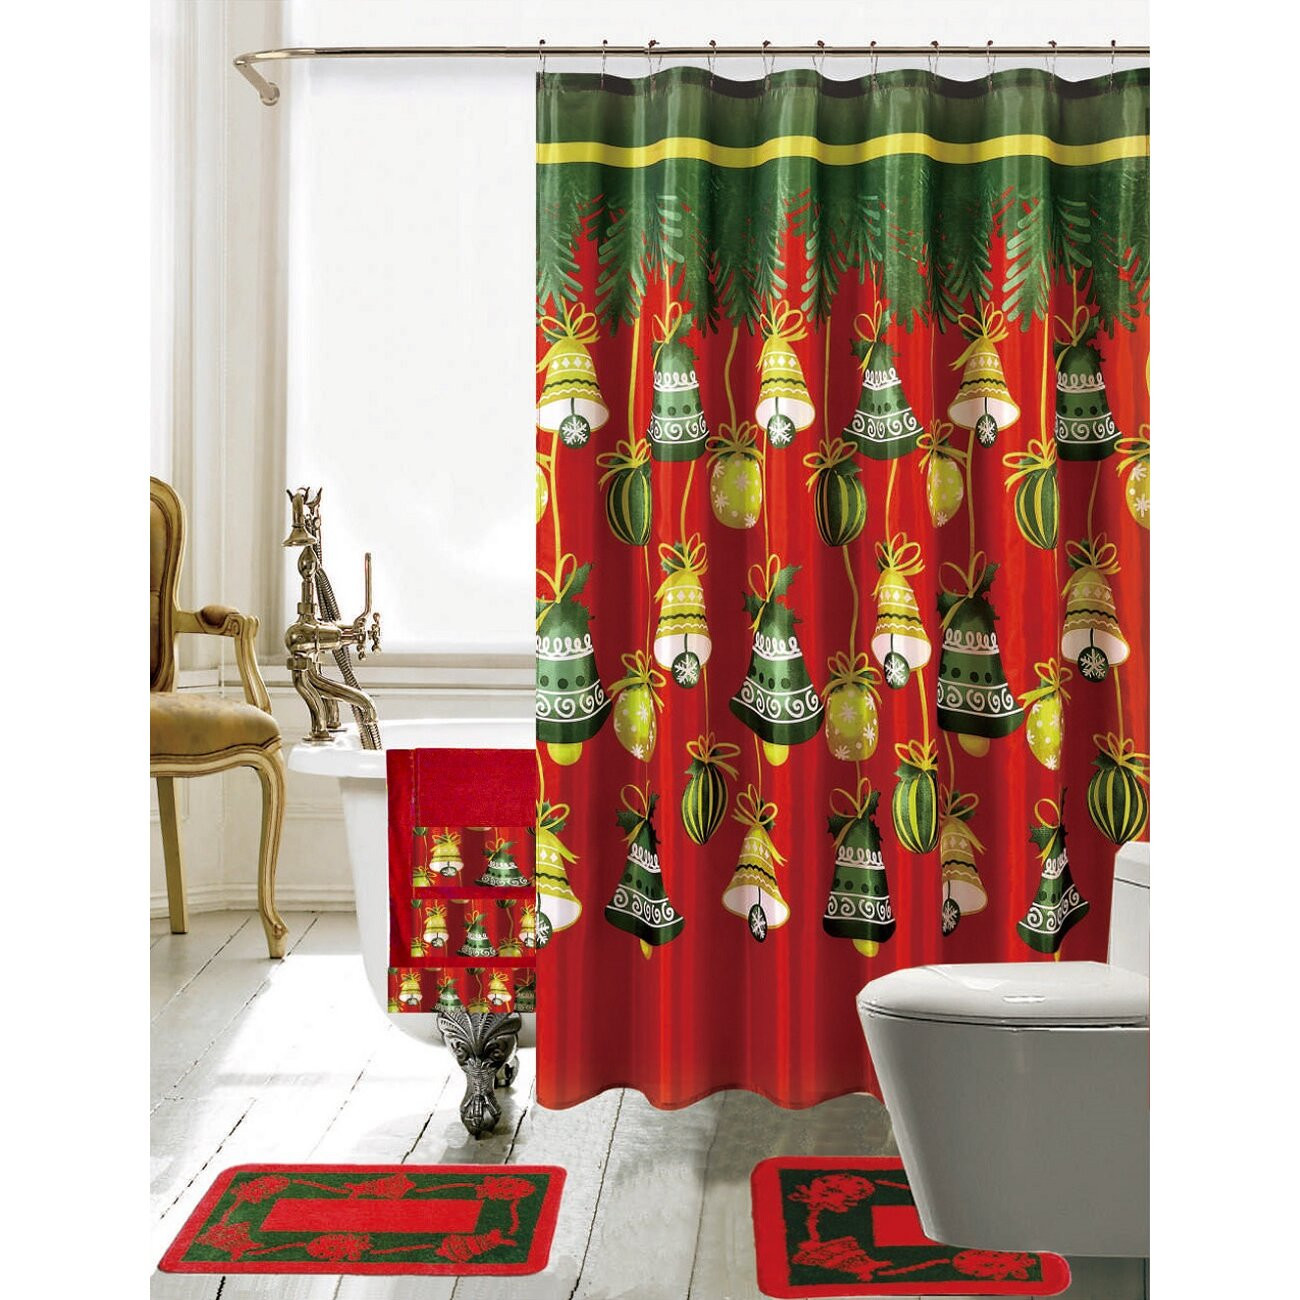 Bathroom Sets With Shower Curtain
 Daniels Bath Christmas Bathroom Decor 18 Piece Shower